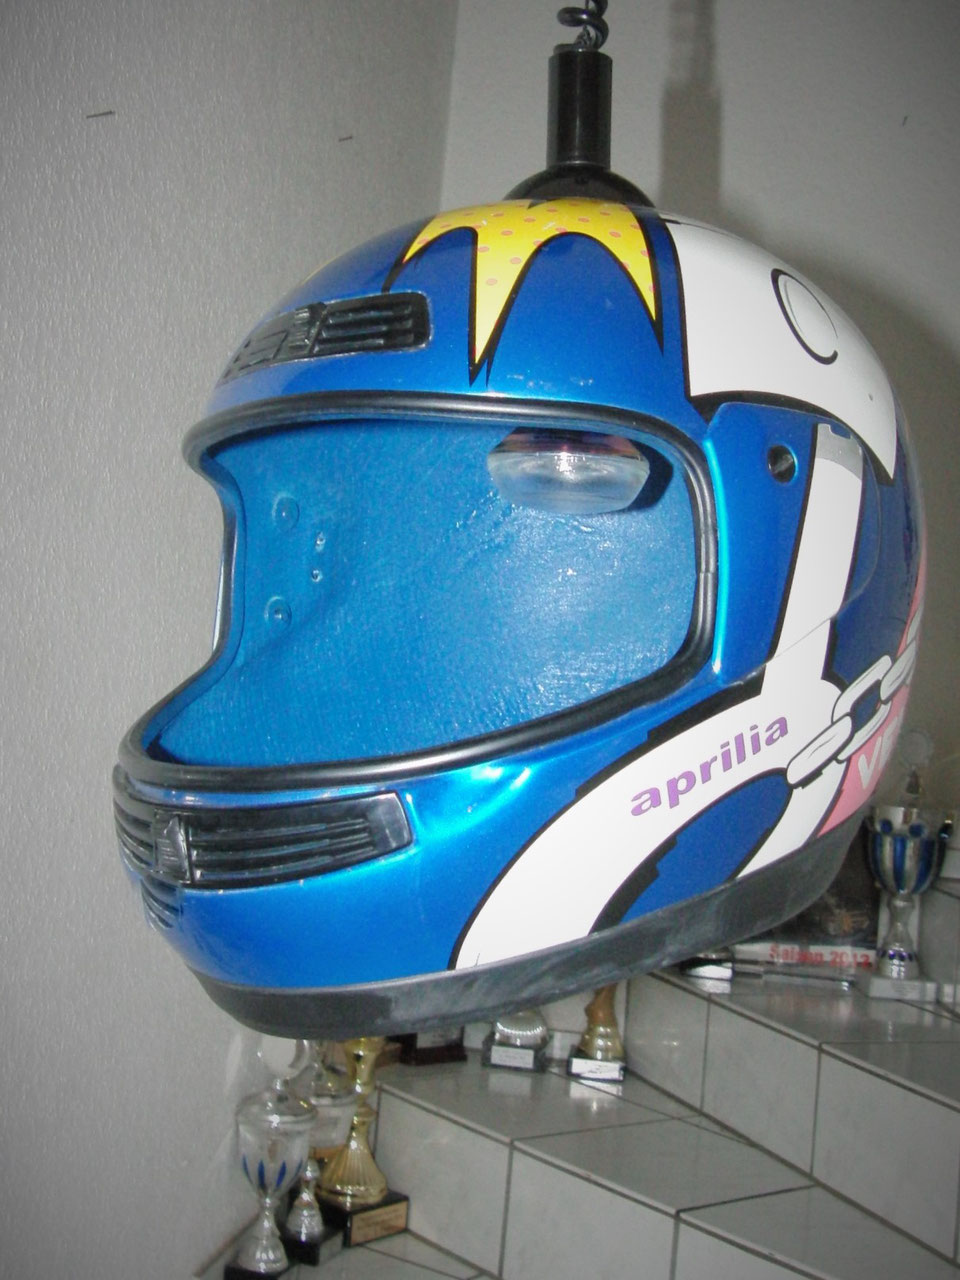 Racing Helm- Hängelampe